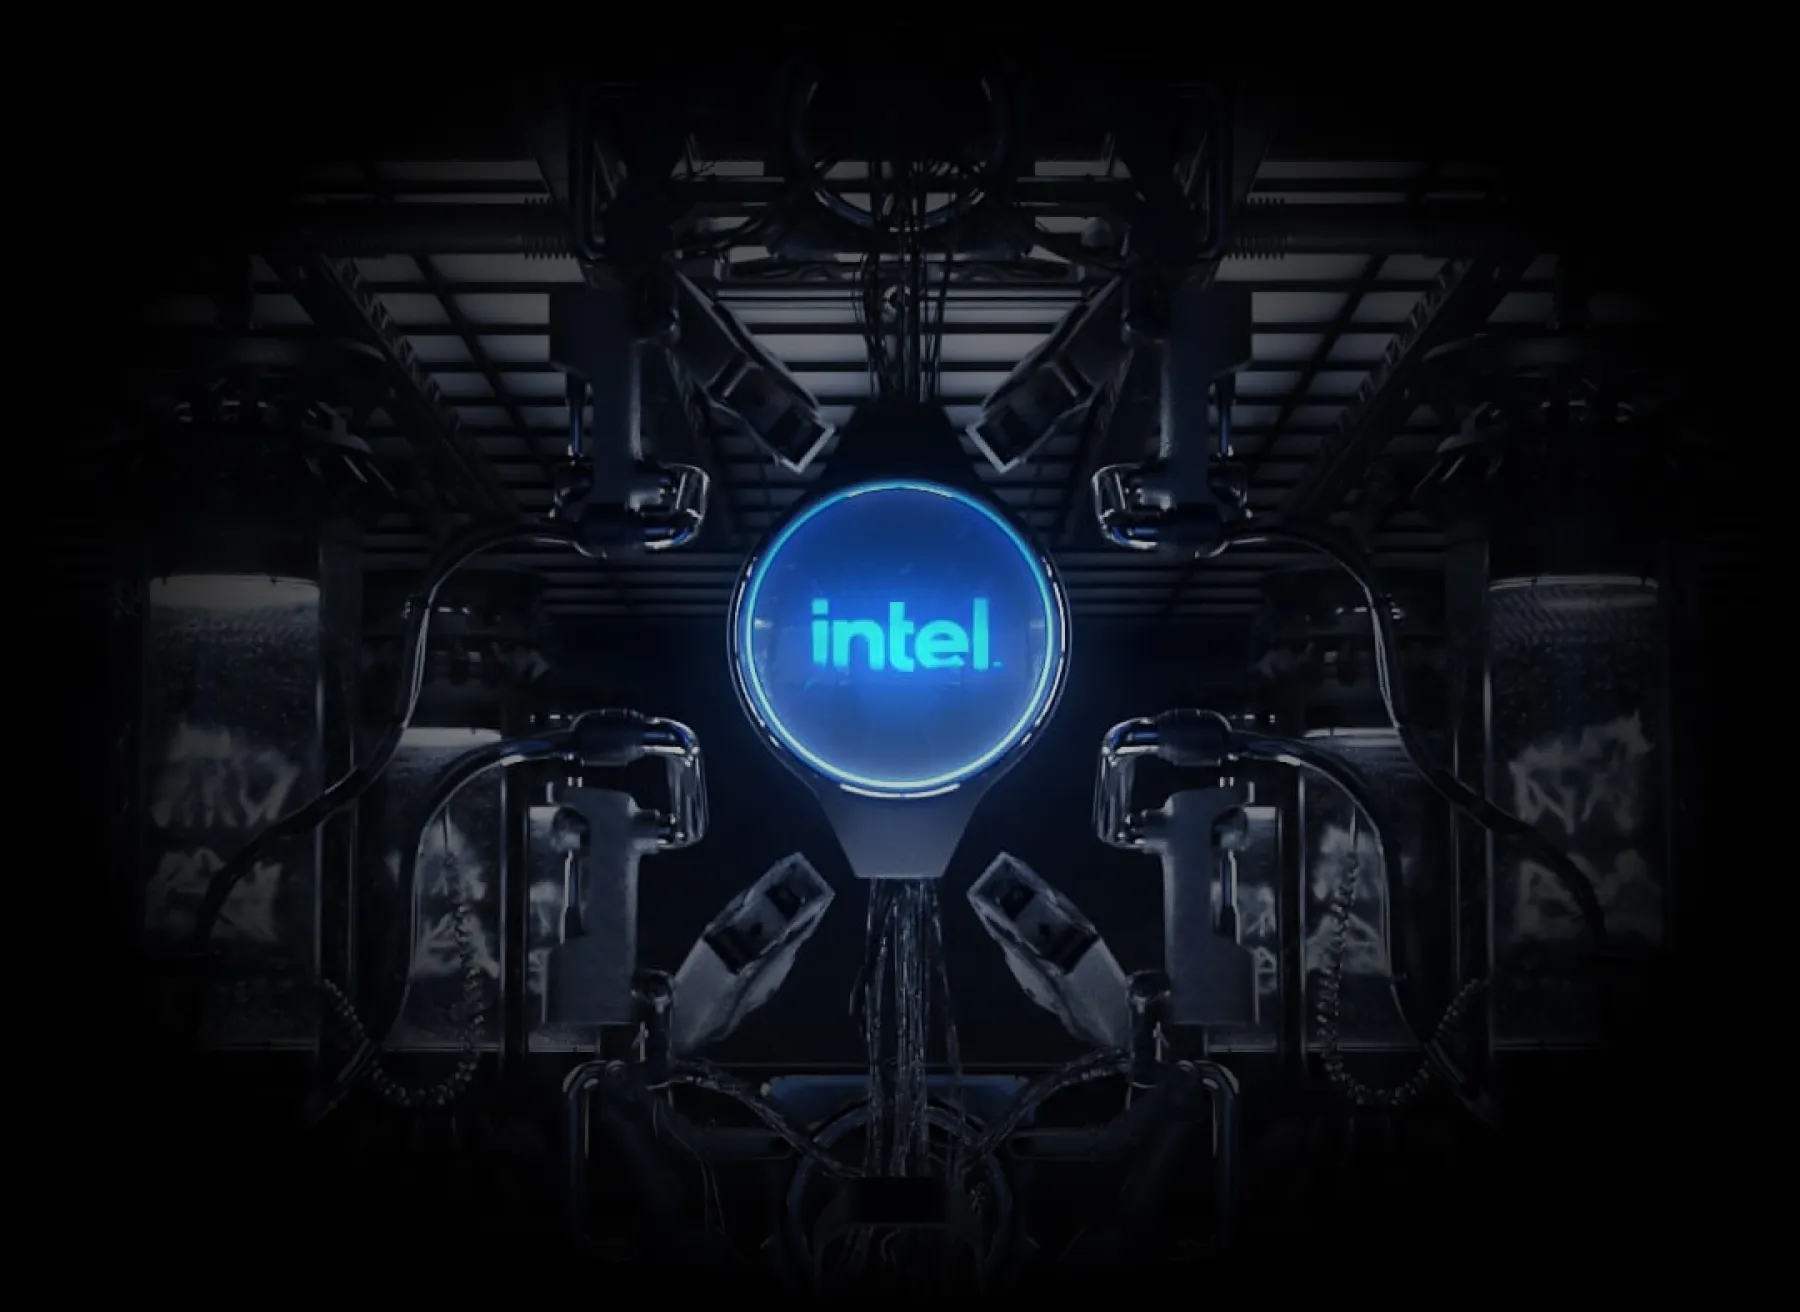 Intel logo on a dark background.